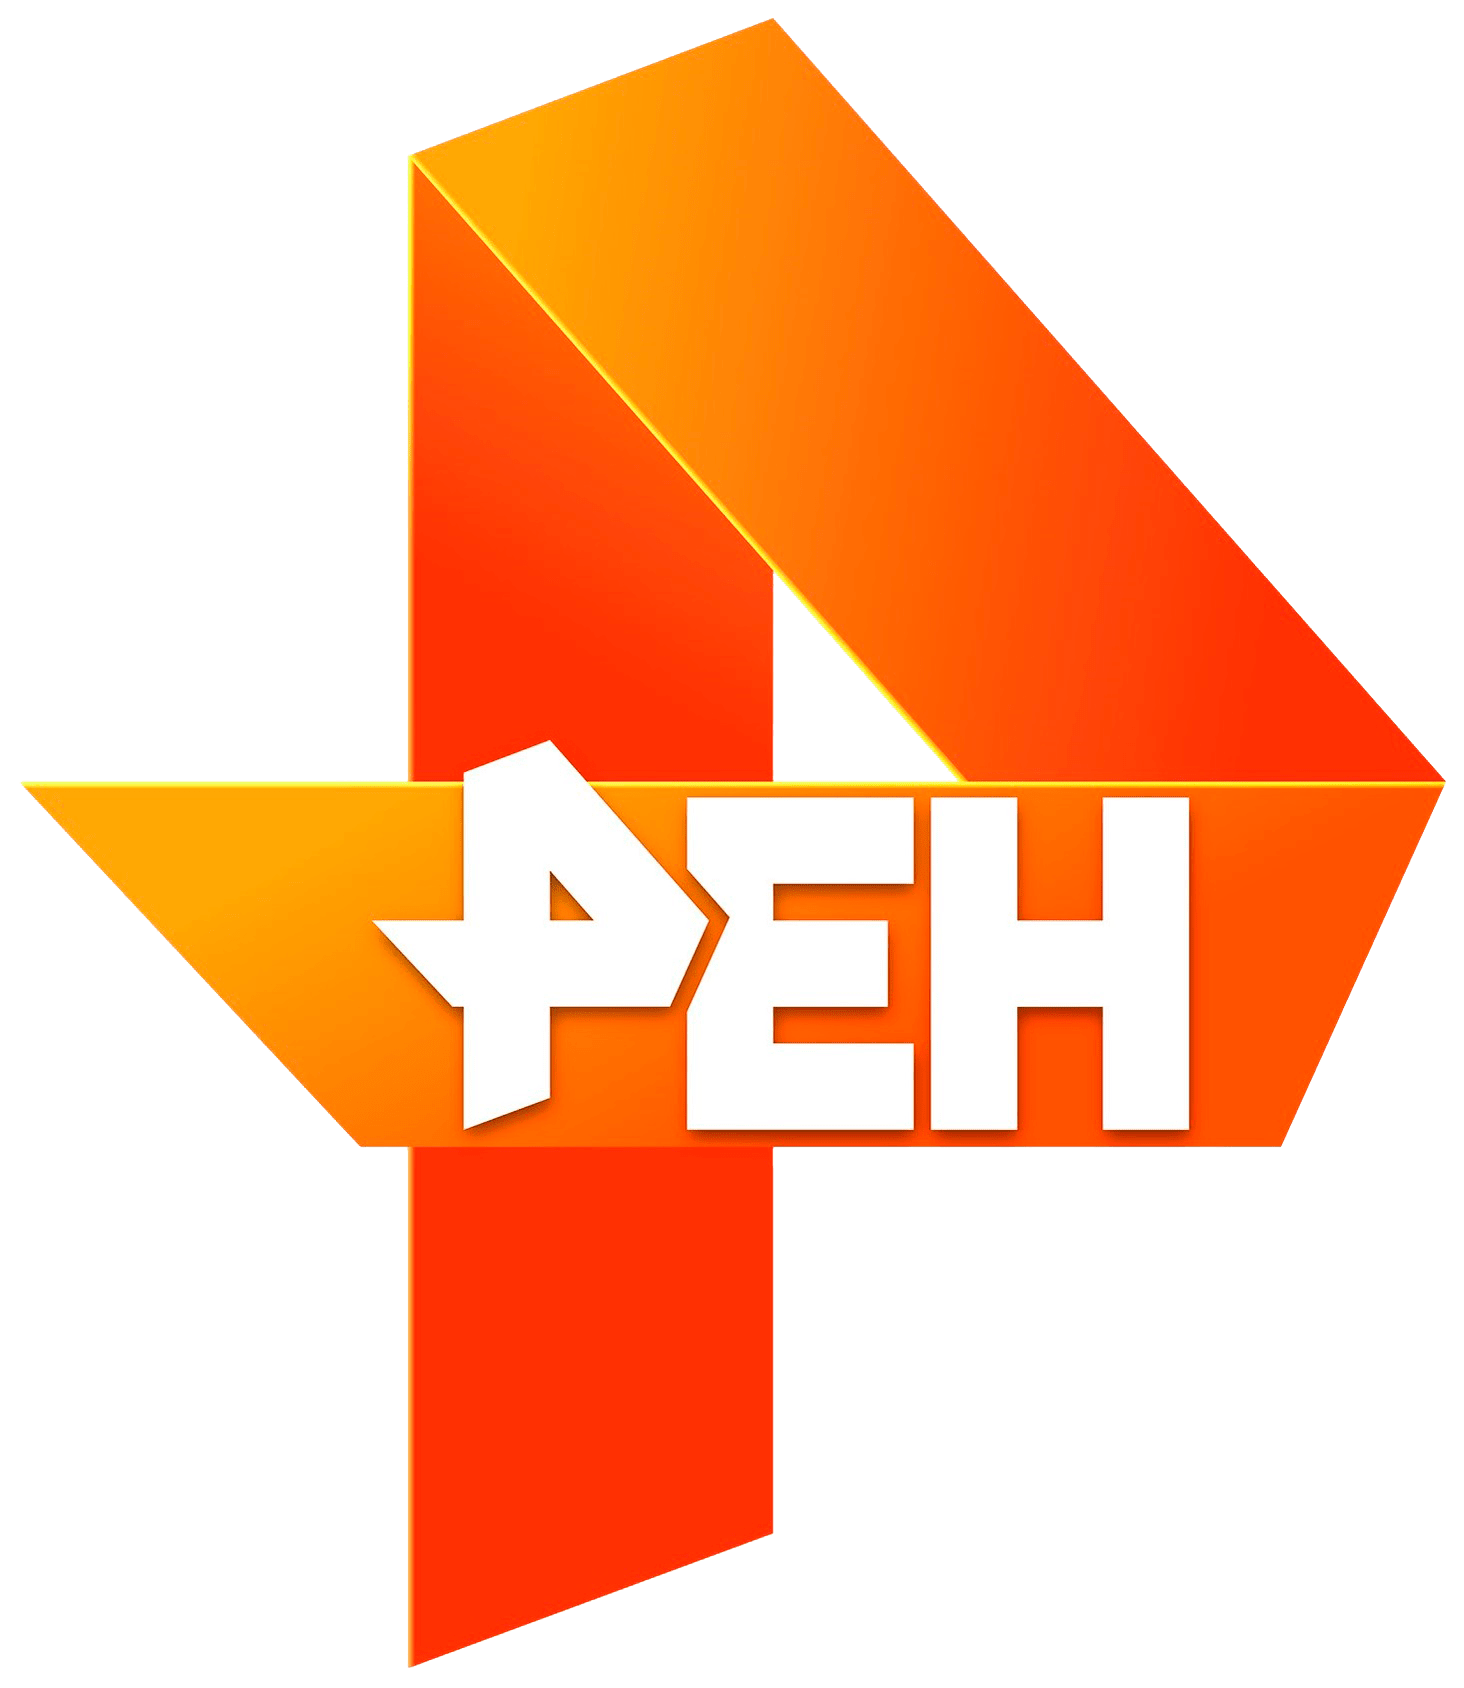 Раземщение рекламы РЕН ТВ, г. Липецк